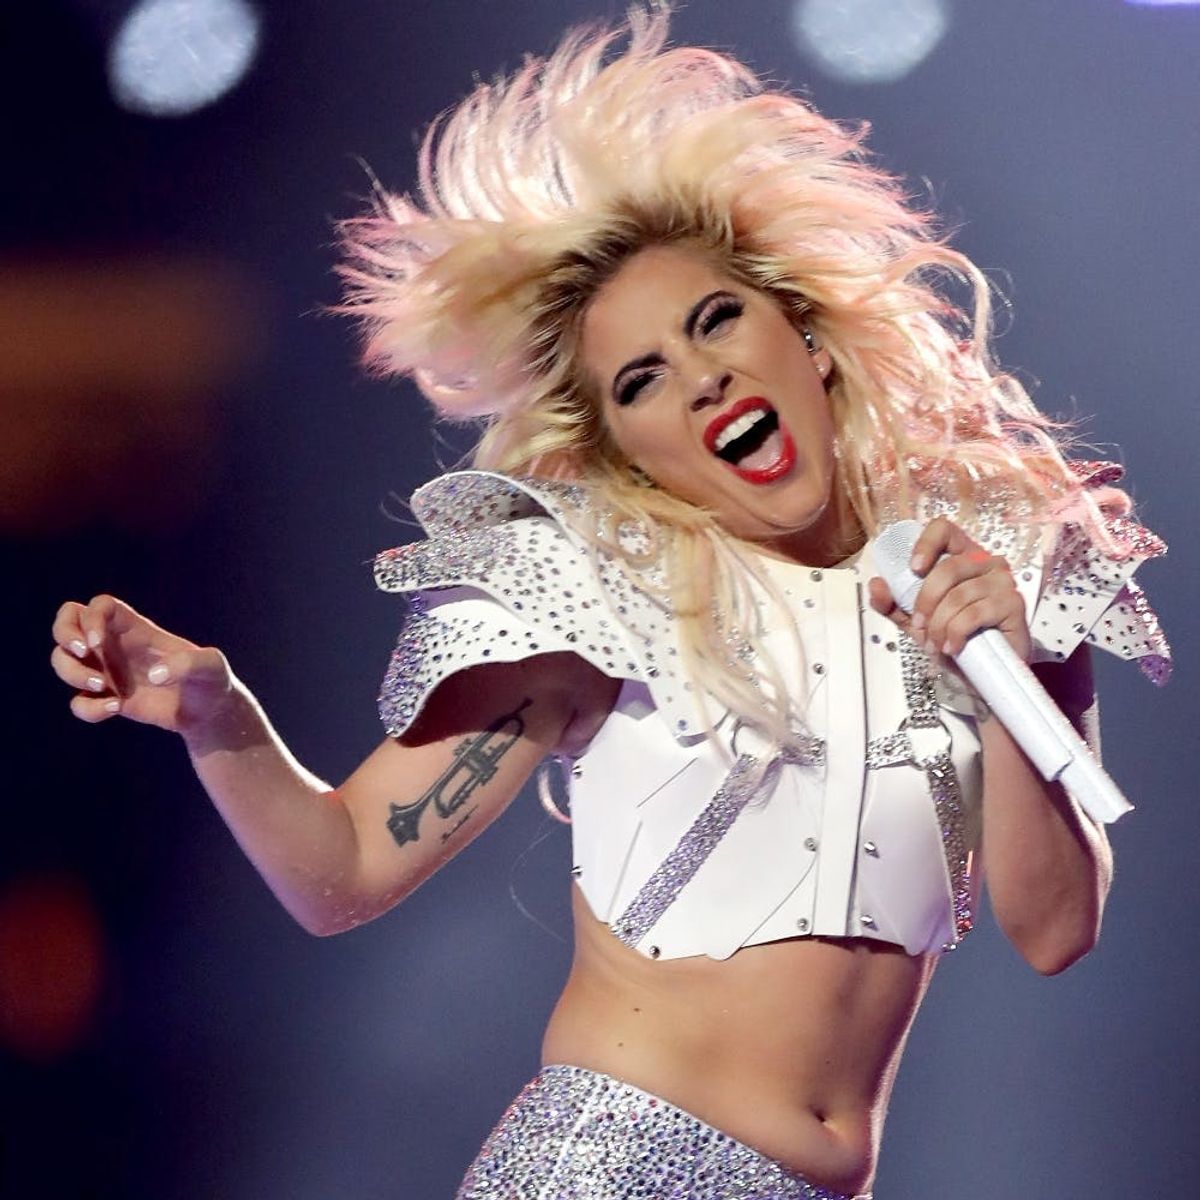 Lady Gaga Finally Broke Her Silence on the Super Bowl Body-Shaming